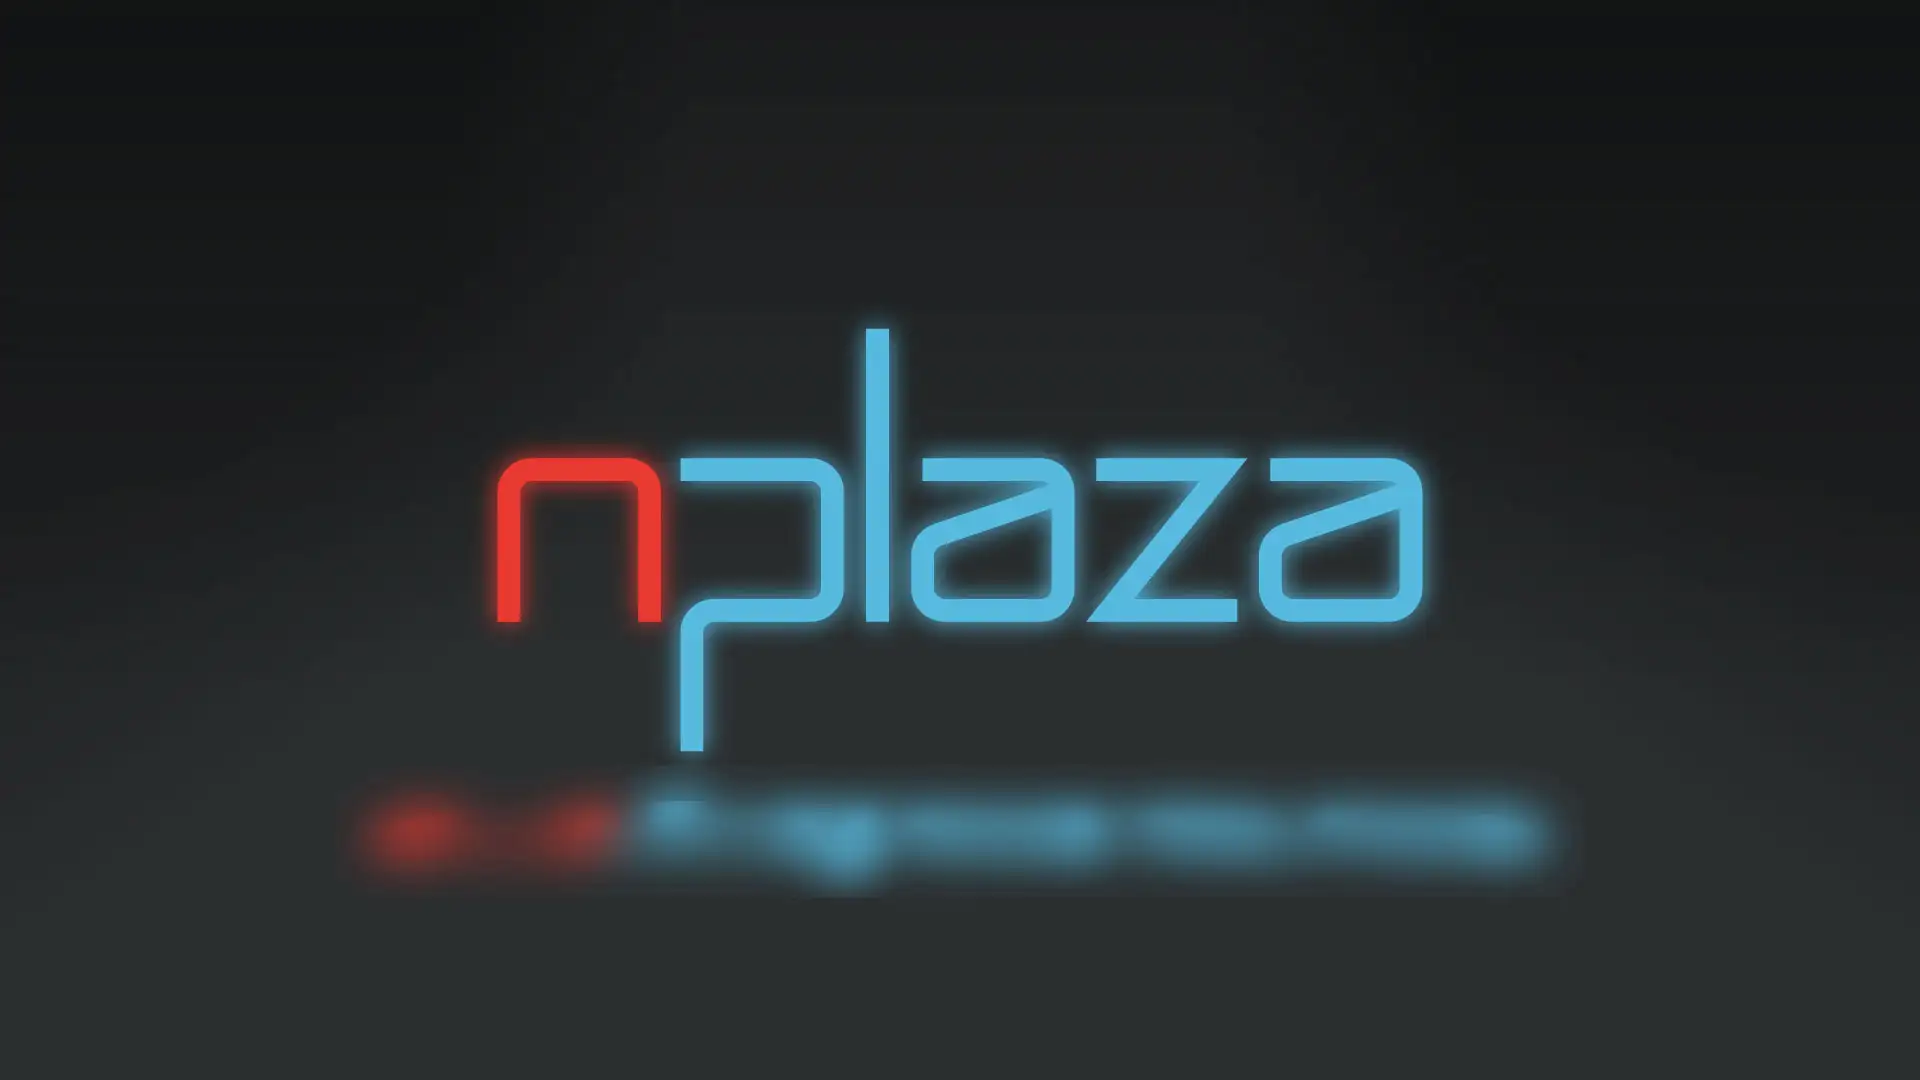 nplaza logo branding design by Dusty Drake